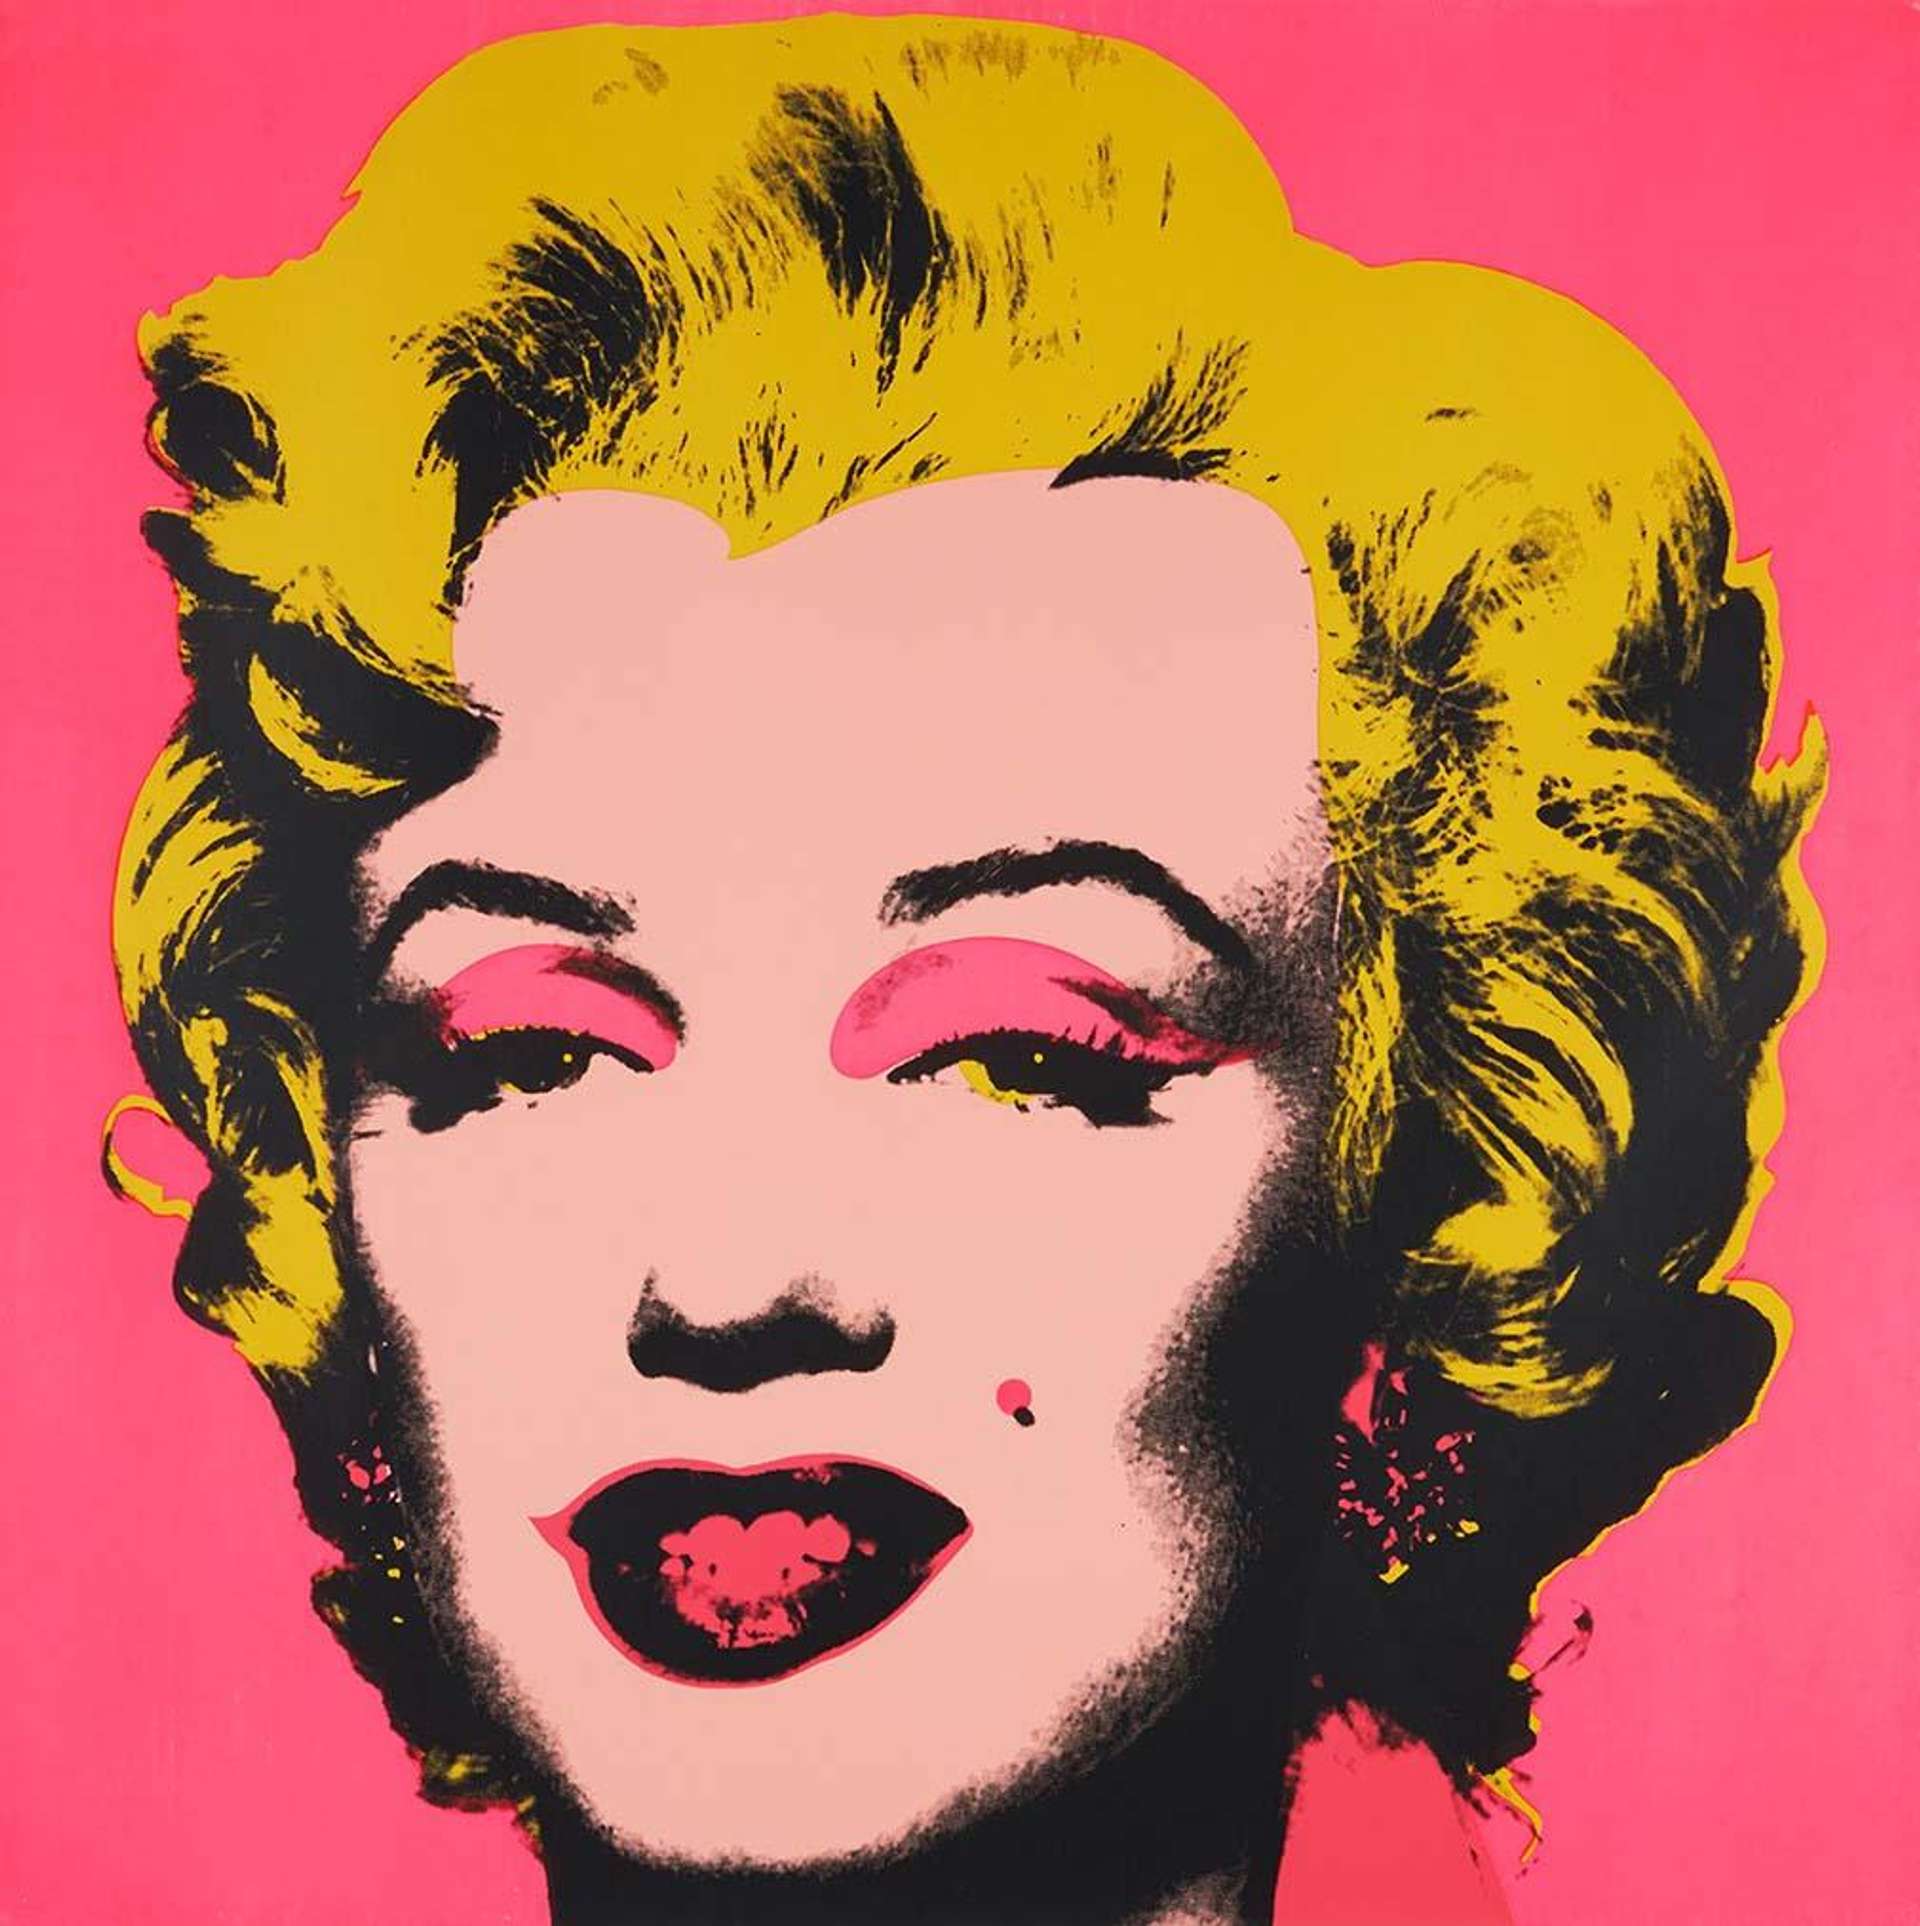 A screenprint by Andy Warhol depicting Marilyn Monroe